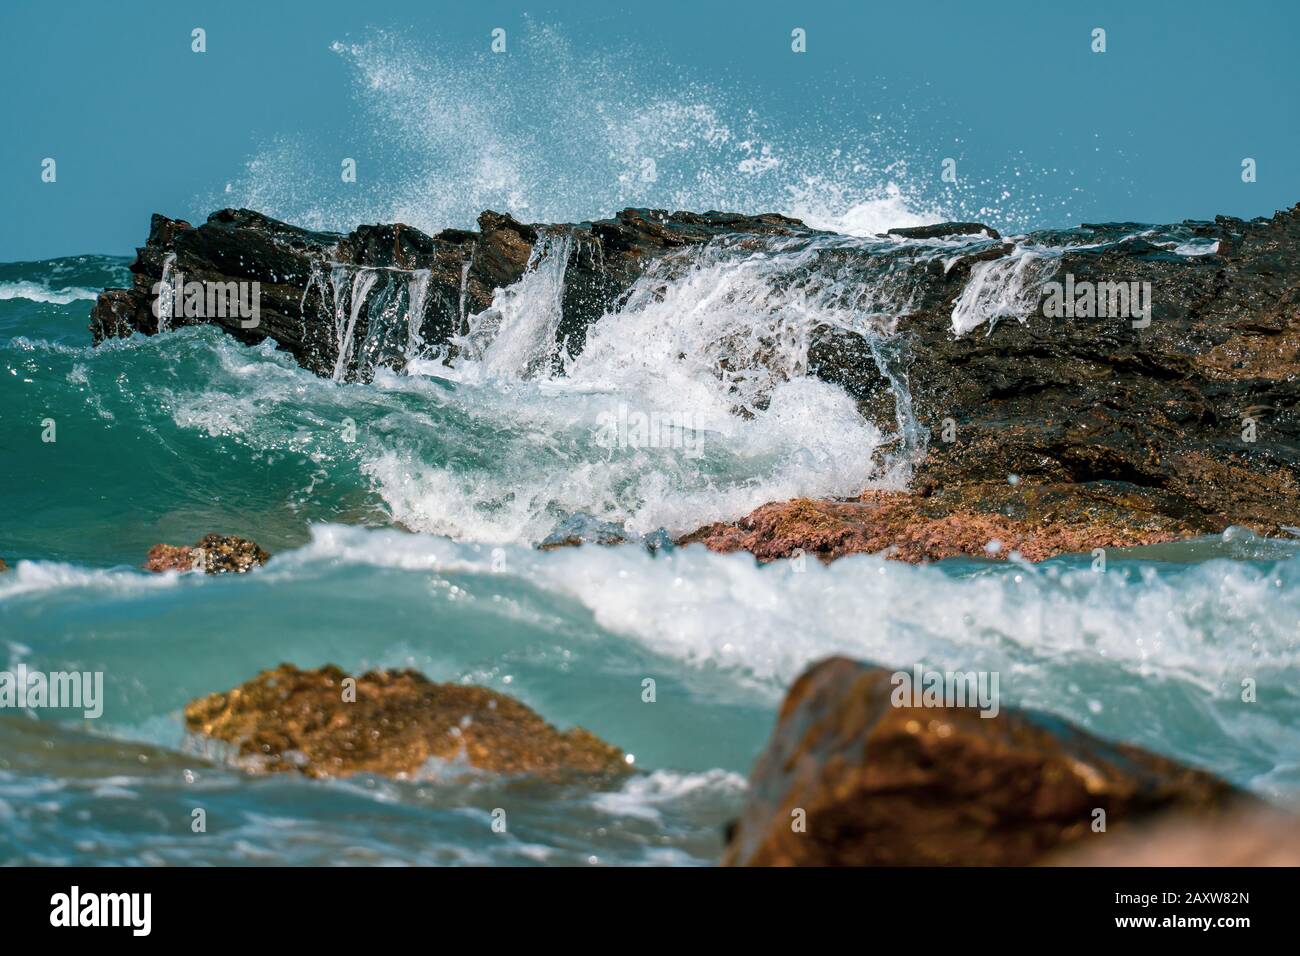 Waves crashing on rocks close-up under the bright sun Stock Photo